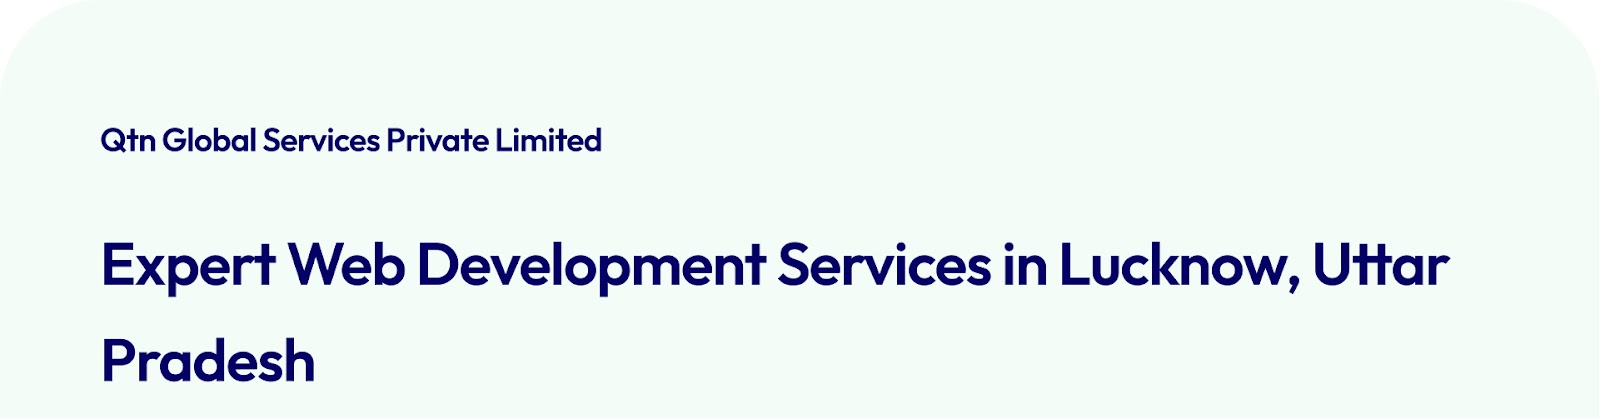 Expert Web Development Services in Lucknow, Uttar Pradesh 